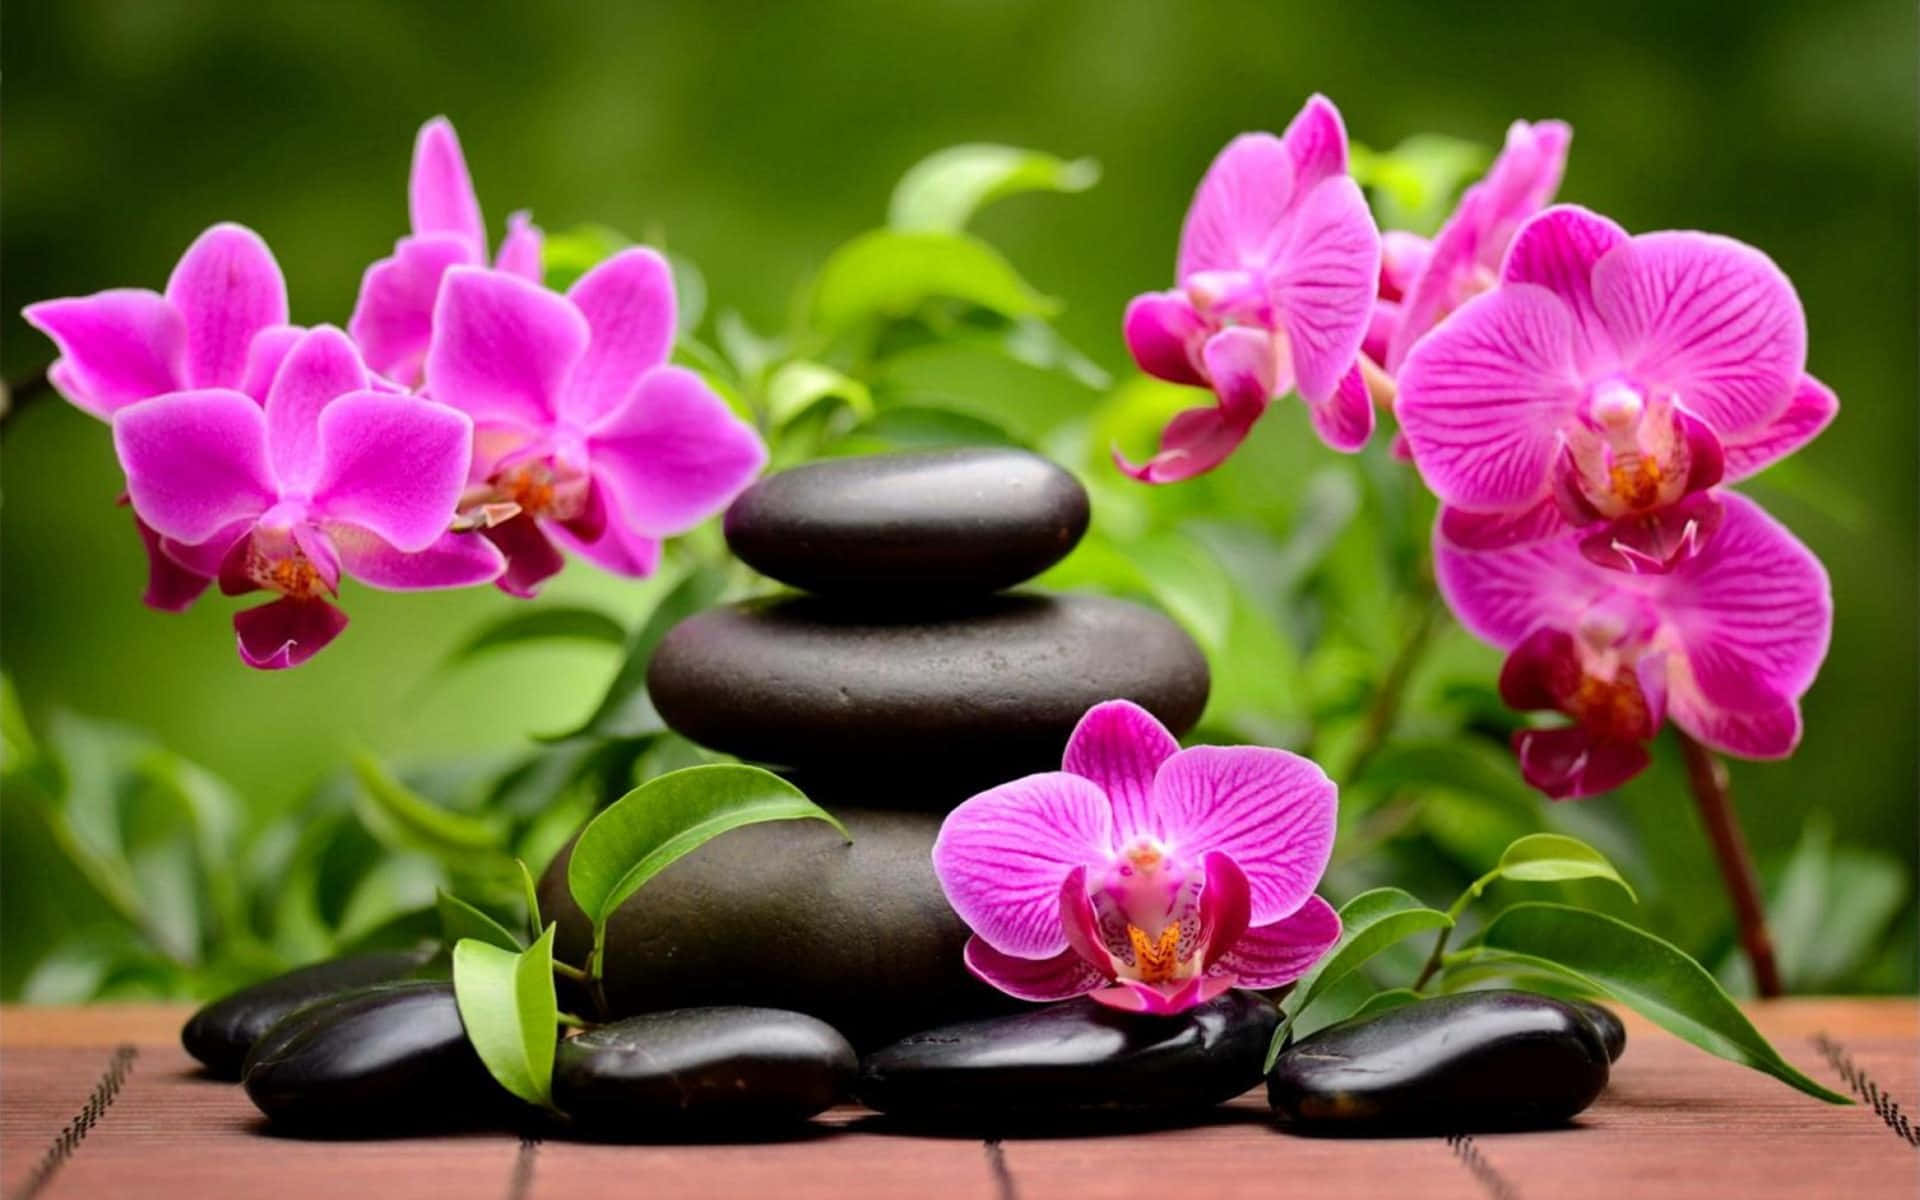 Stunning Orchid Bloom in a Serene Garden